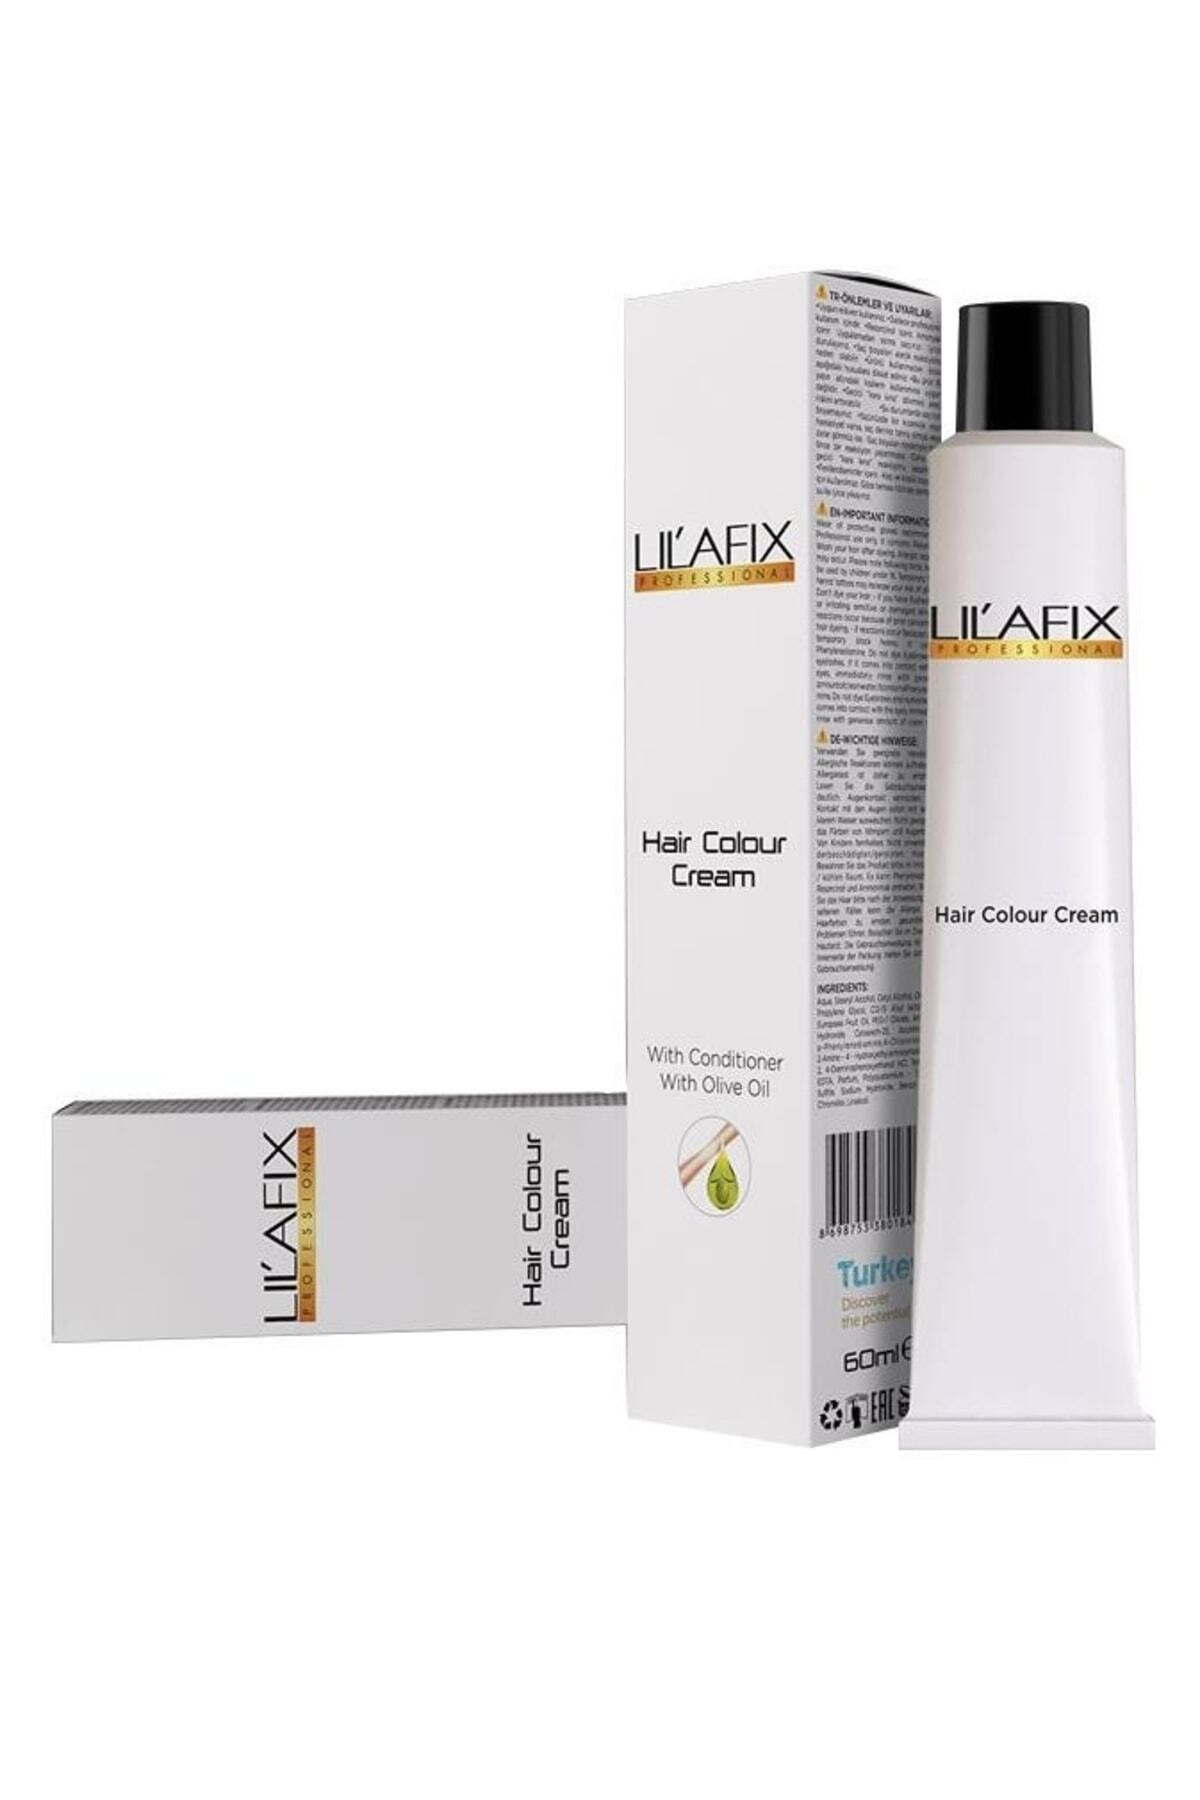 Lilafix Permament Hair Color Cream Natural Appearance 0/01 Silver 60ml Buk60